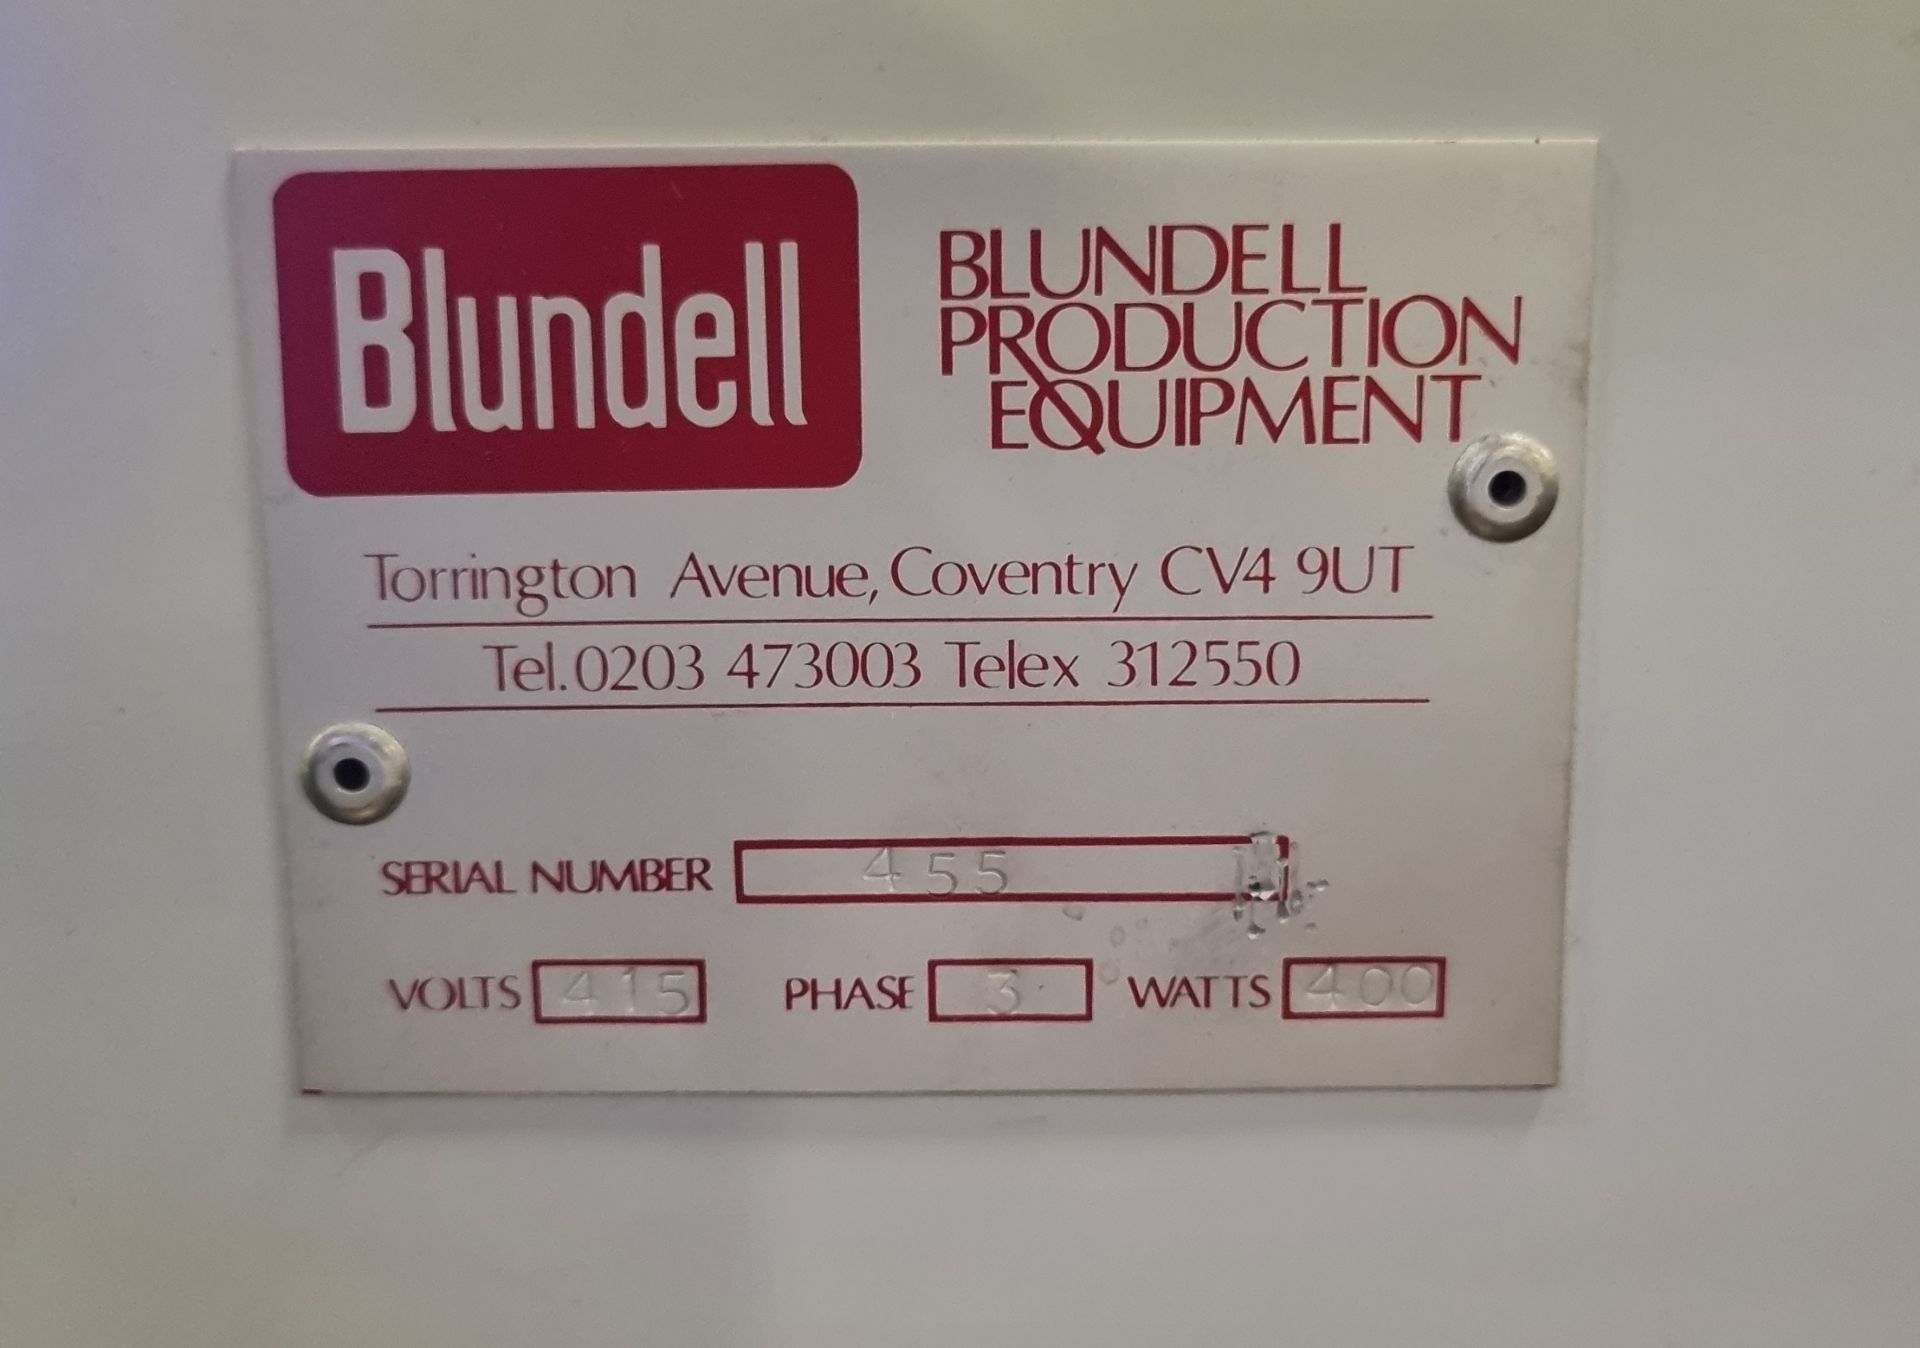 Blundell Production Equipment Cropmatic lead cutting machine - Serial No. 455 - 3 phase 415V 400W - Bild 4 aus 5